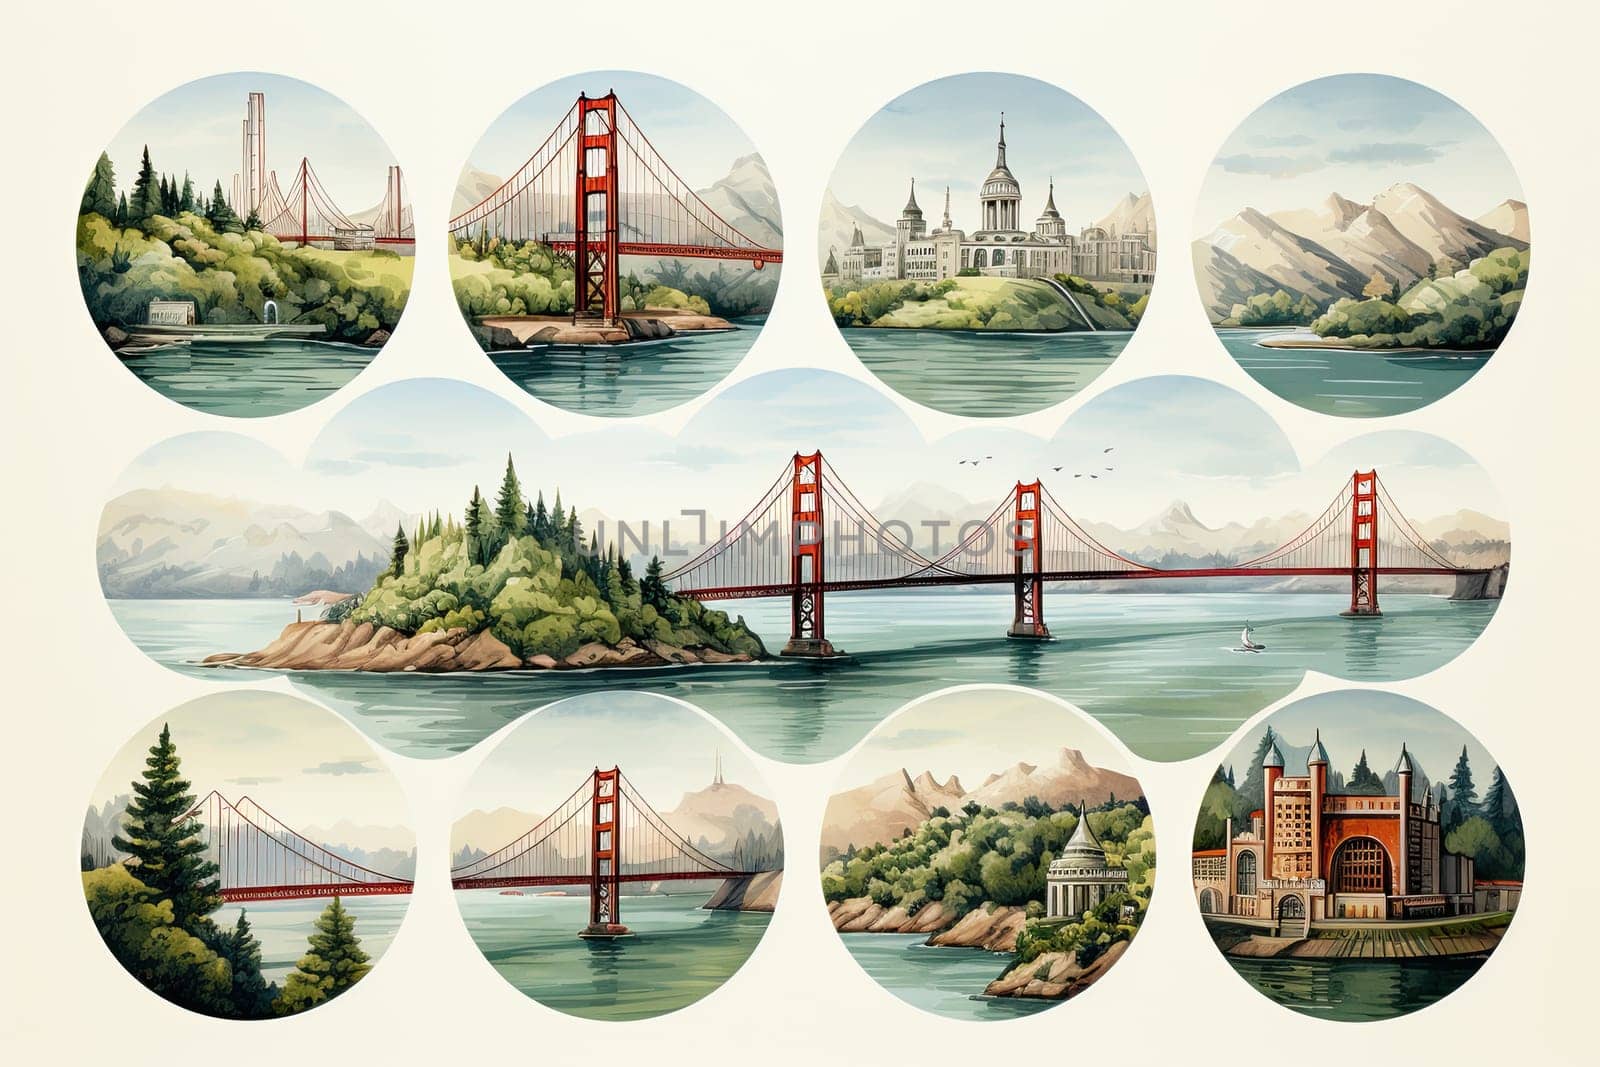 Golden Gate Bridge in San Francisco or Brooklyn bridge, USA. The big, red suspension bridge across the Strait in America, Generative AI